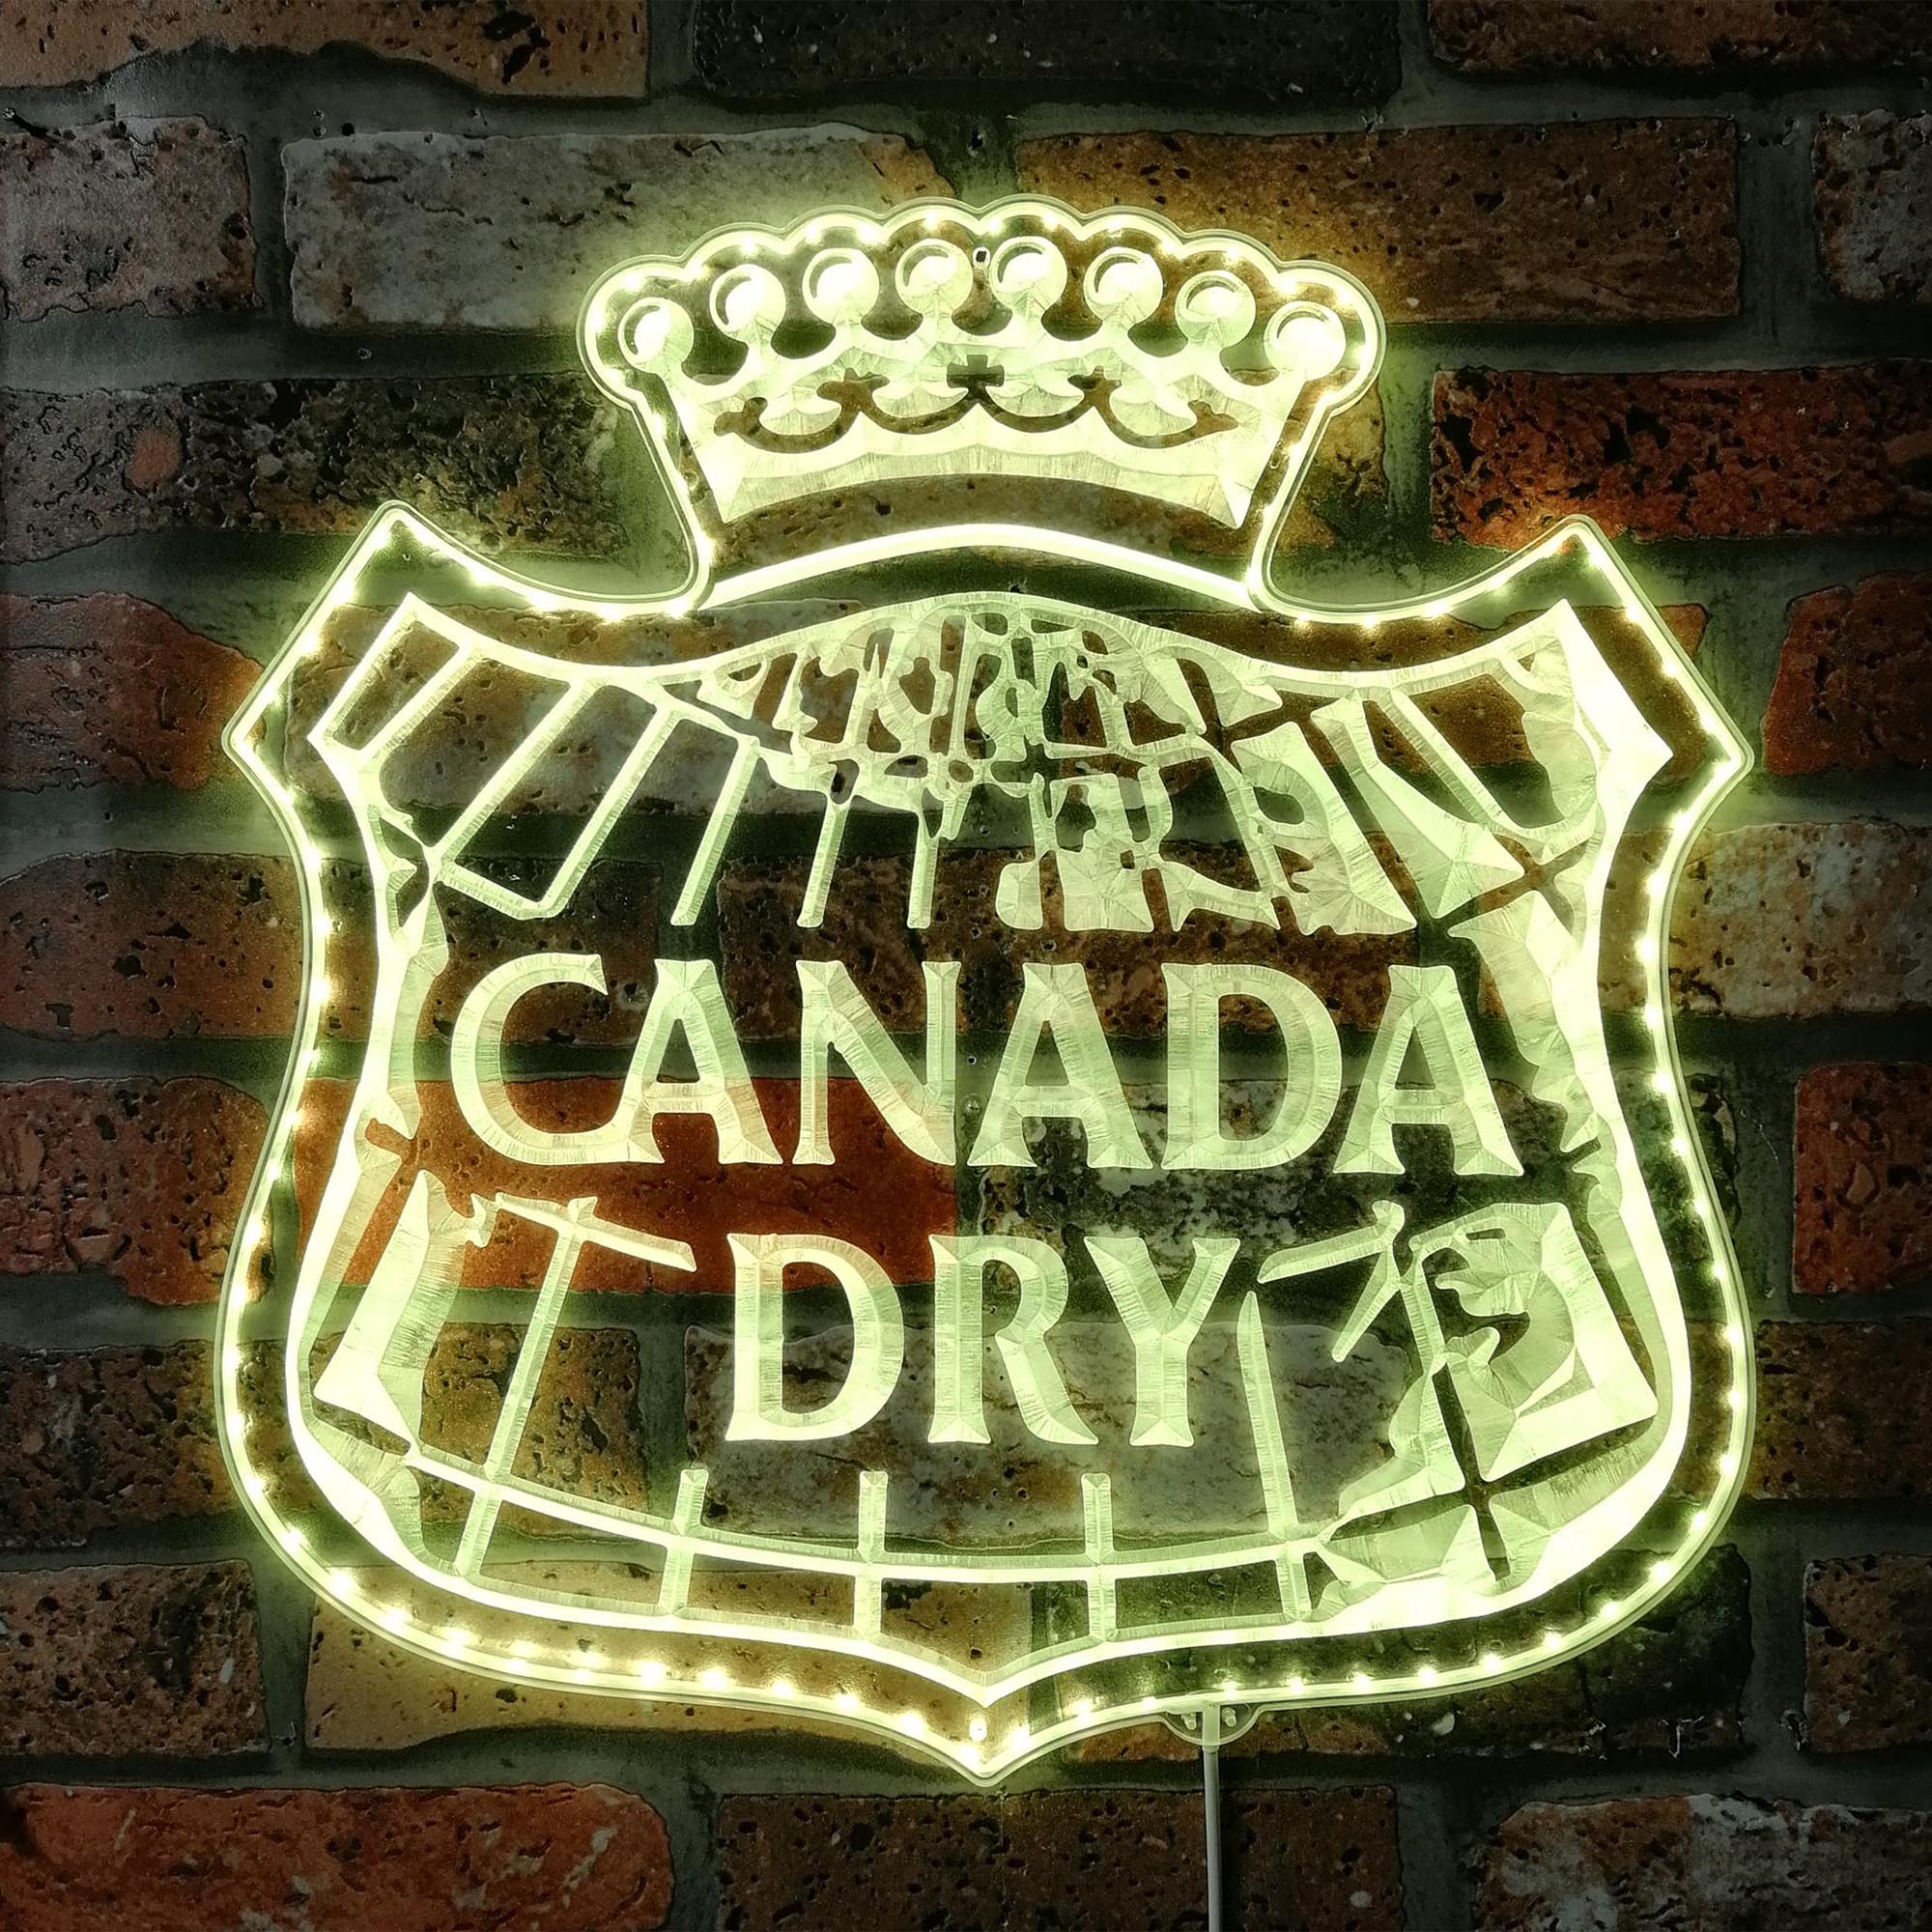 Canada Dry Dynamic RGB Edge Lit LED Sign